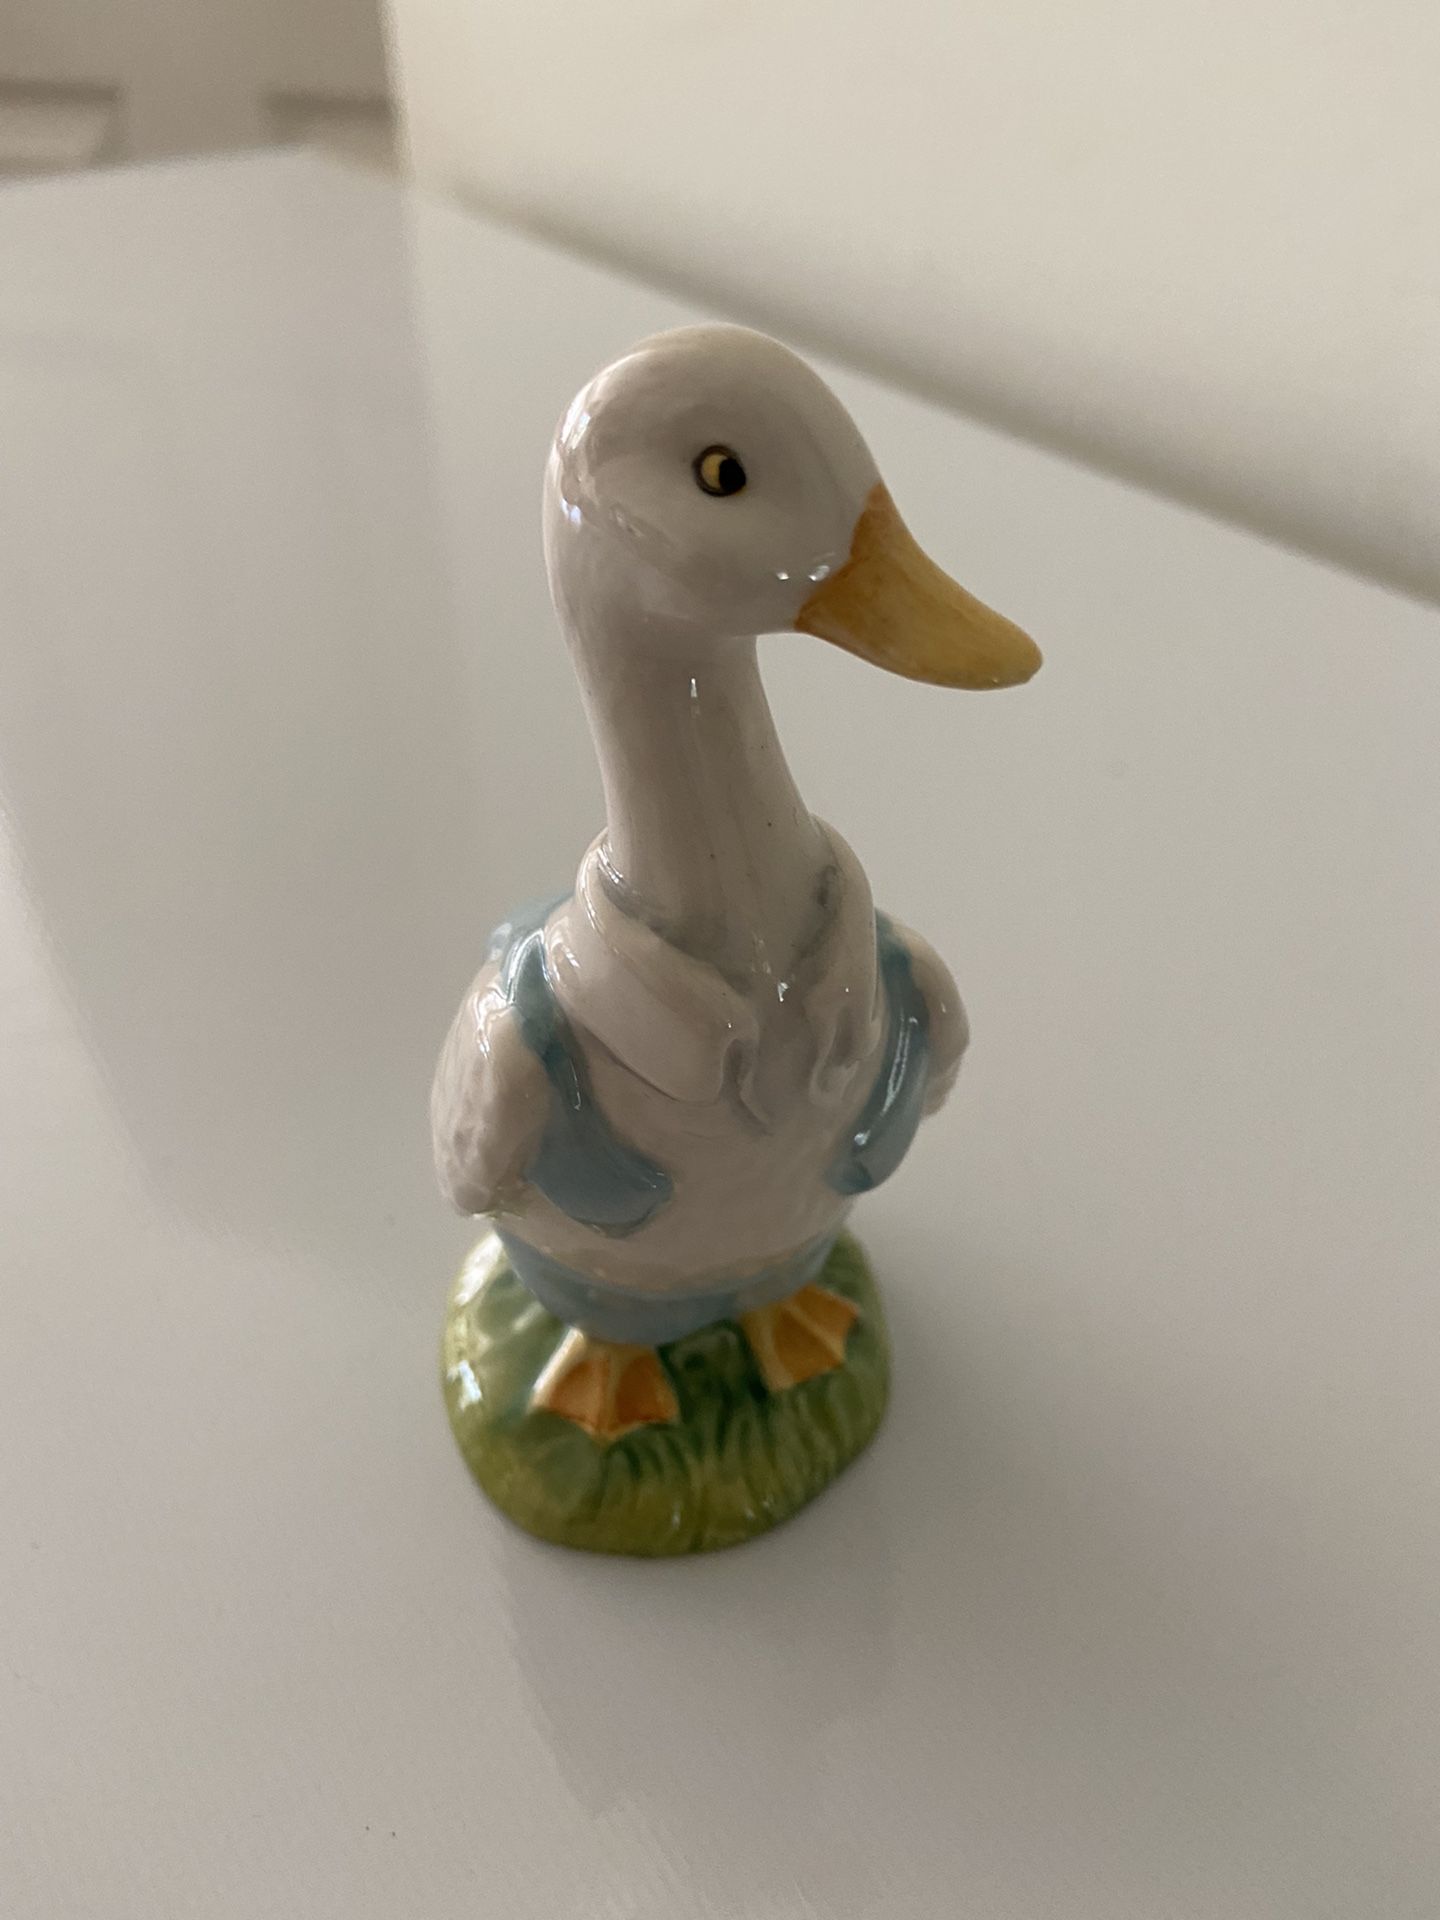 Beatrix potter’s Mr Drake Puddle-Duck Figurine